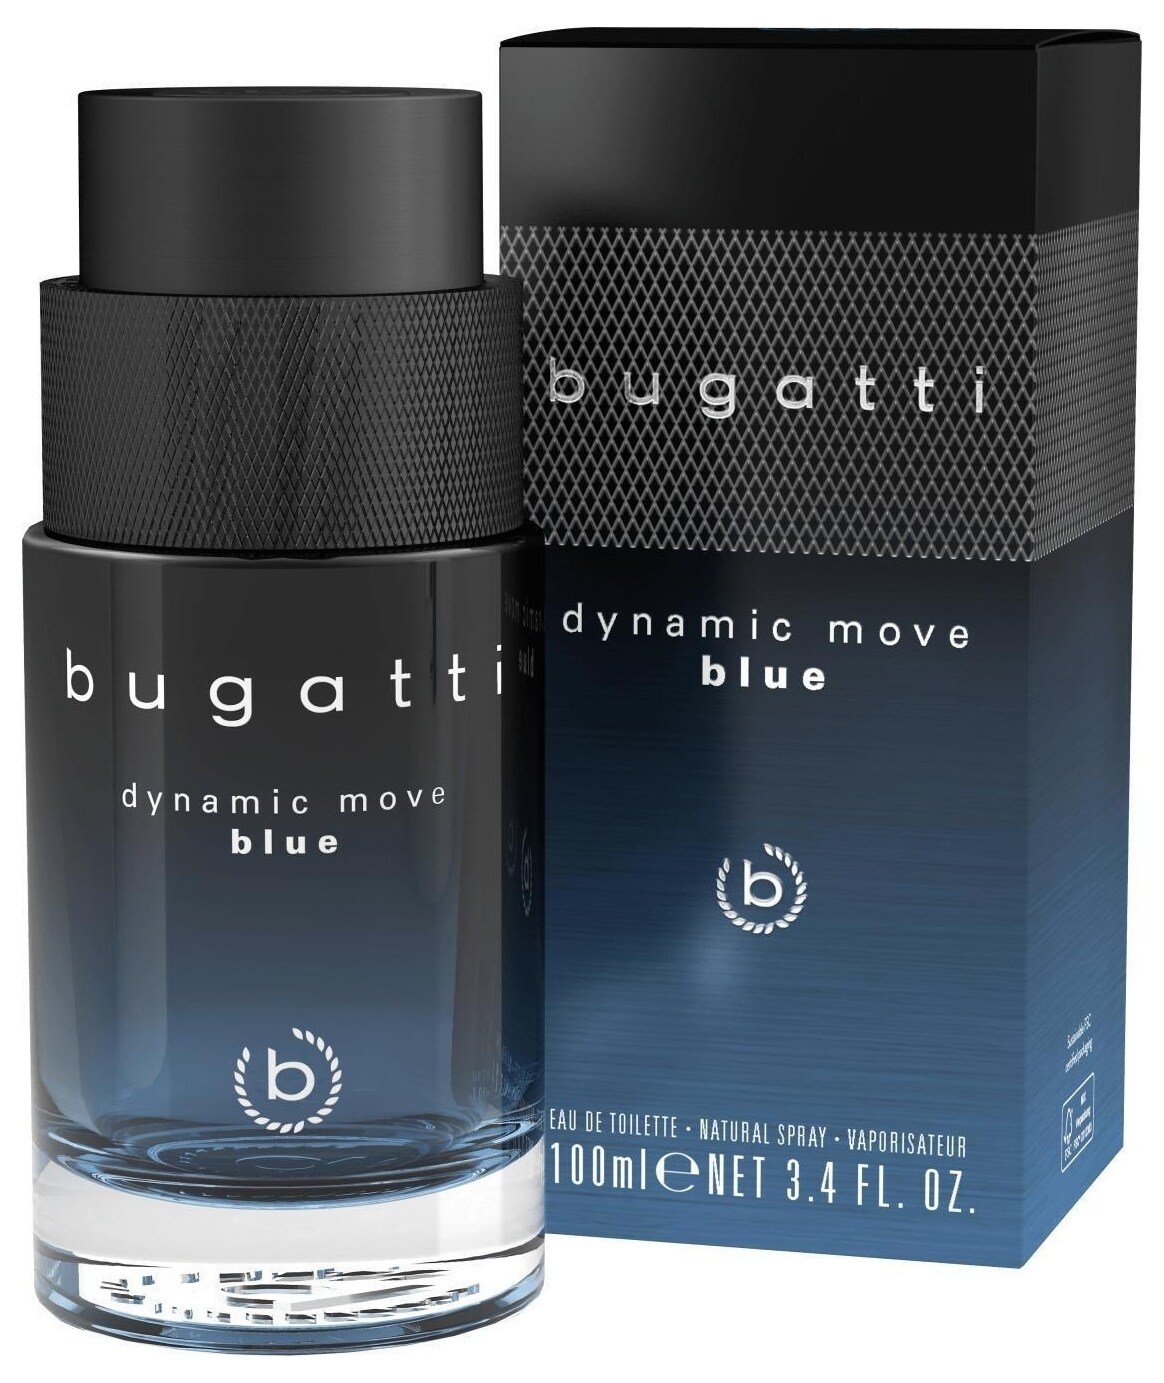 Facts Blue bugatti Reviews by Perfume & Fashion » Dynamic Move